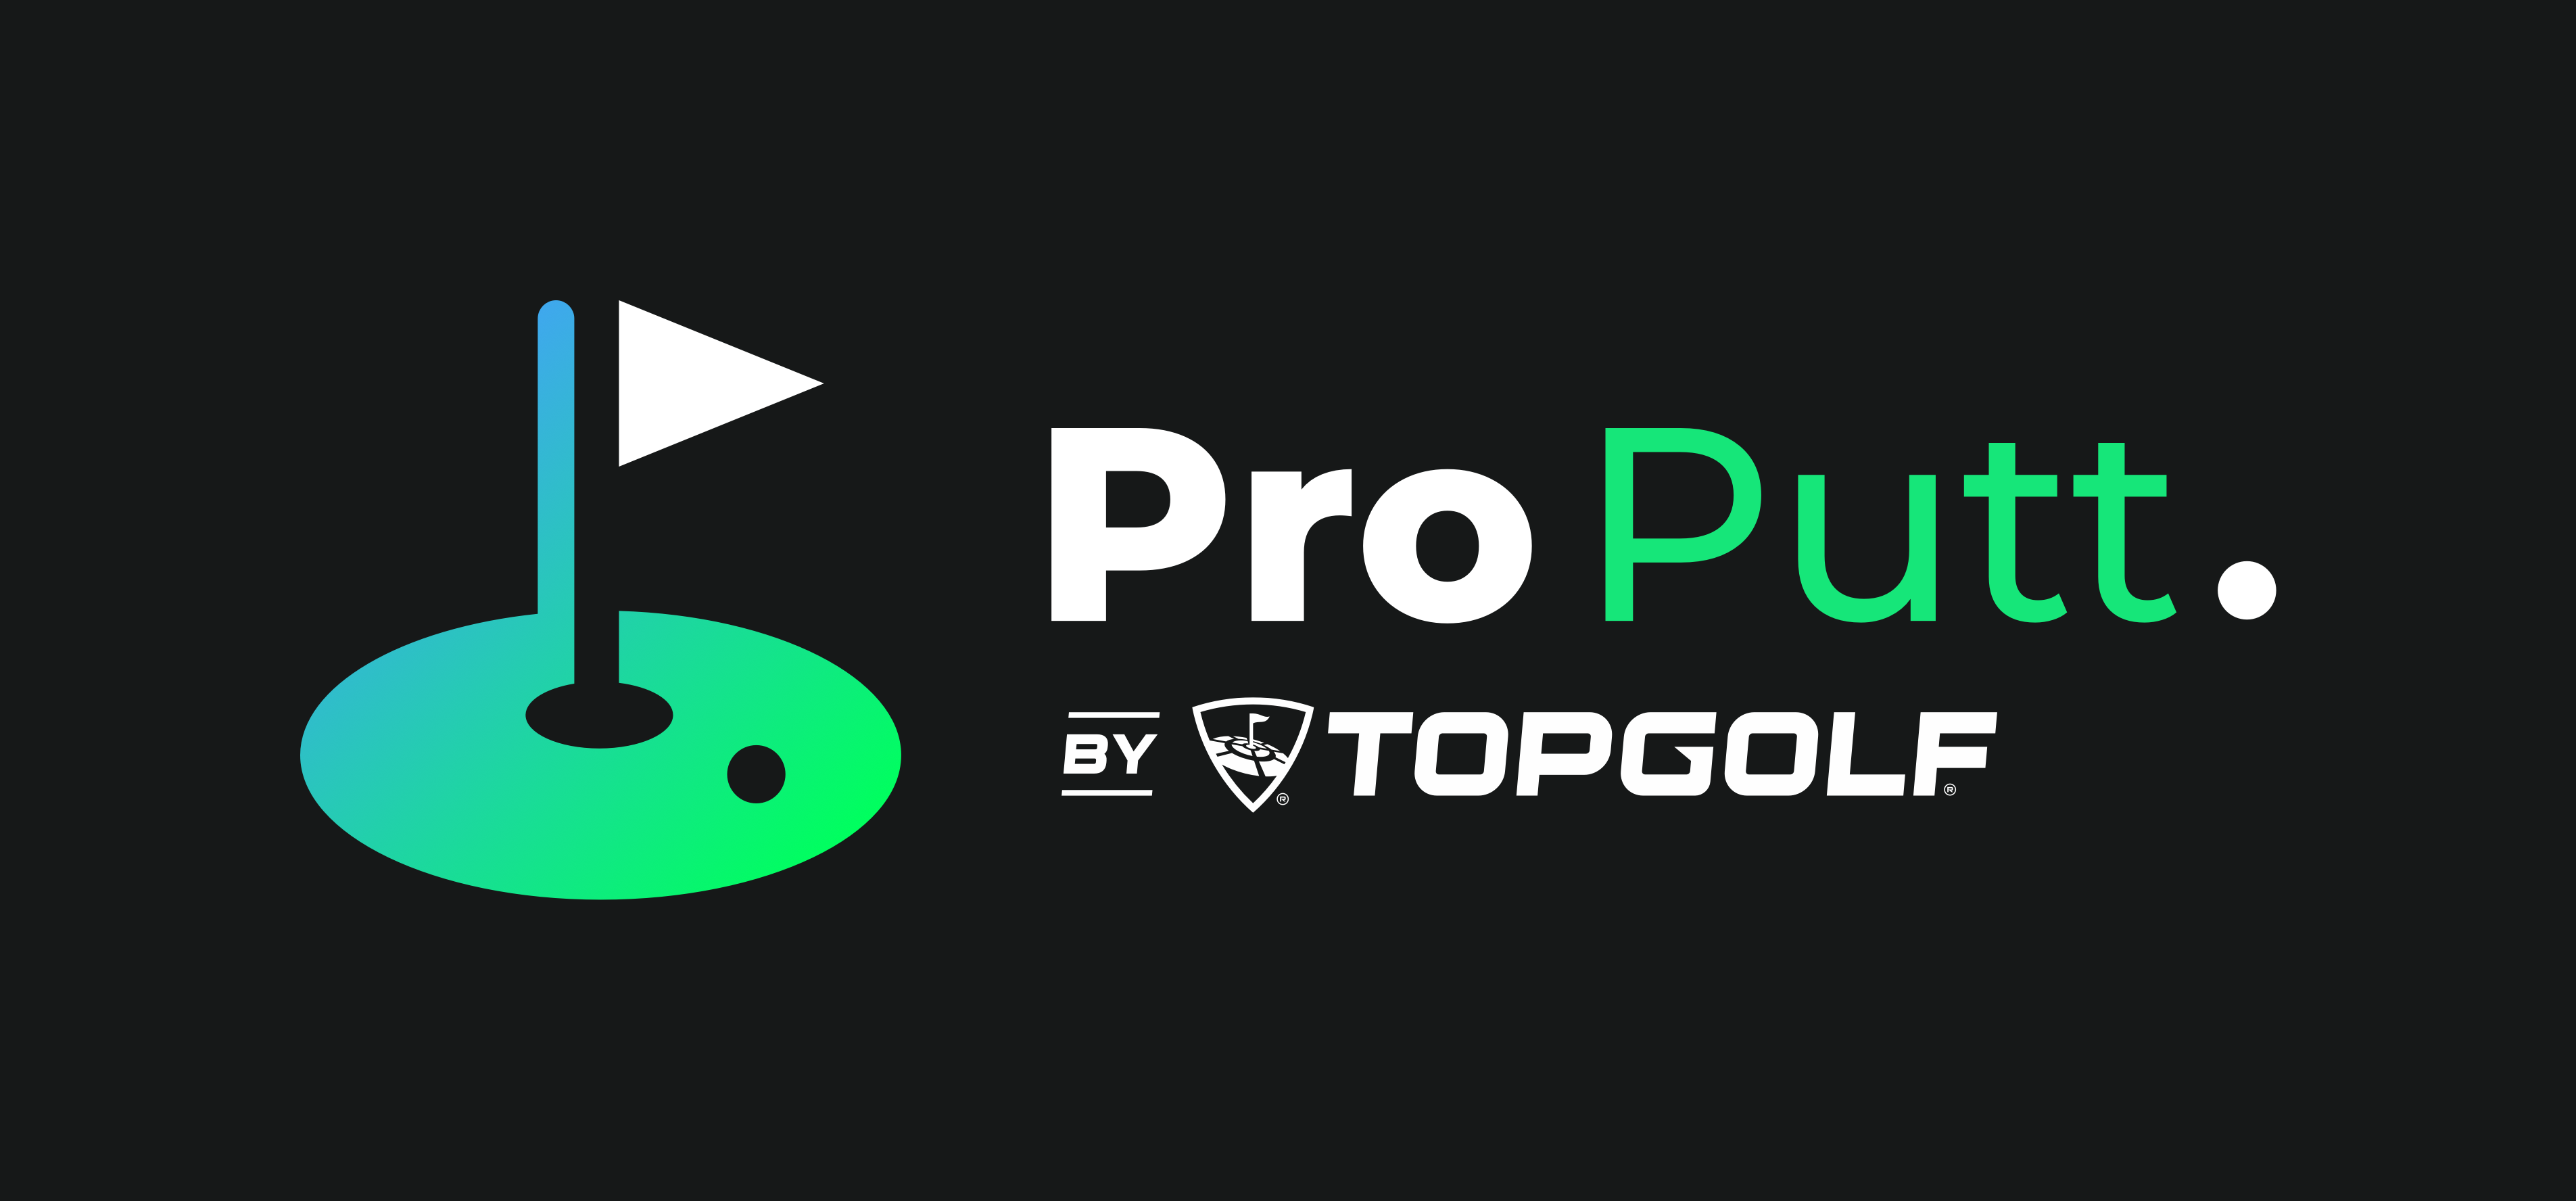 Pro Putt by Topgolf Logo - Horizontal